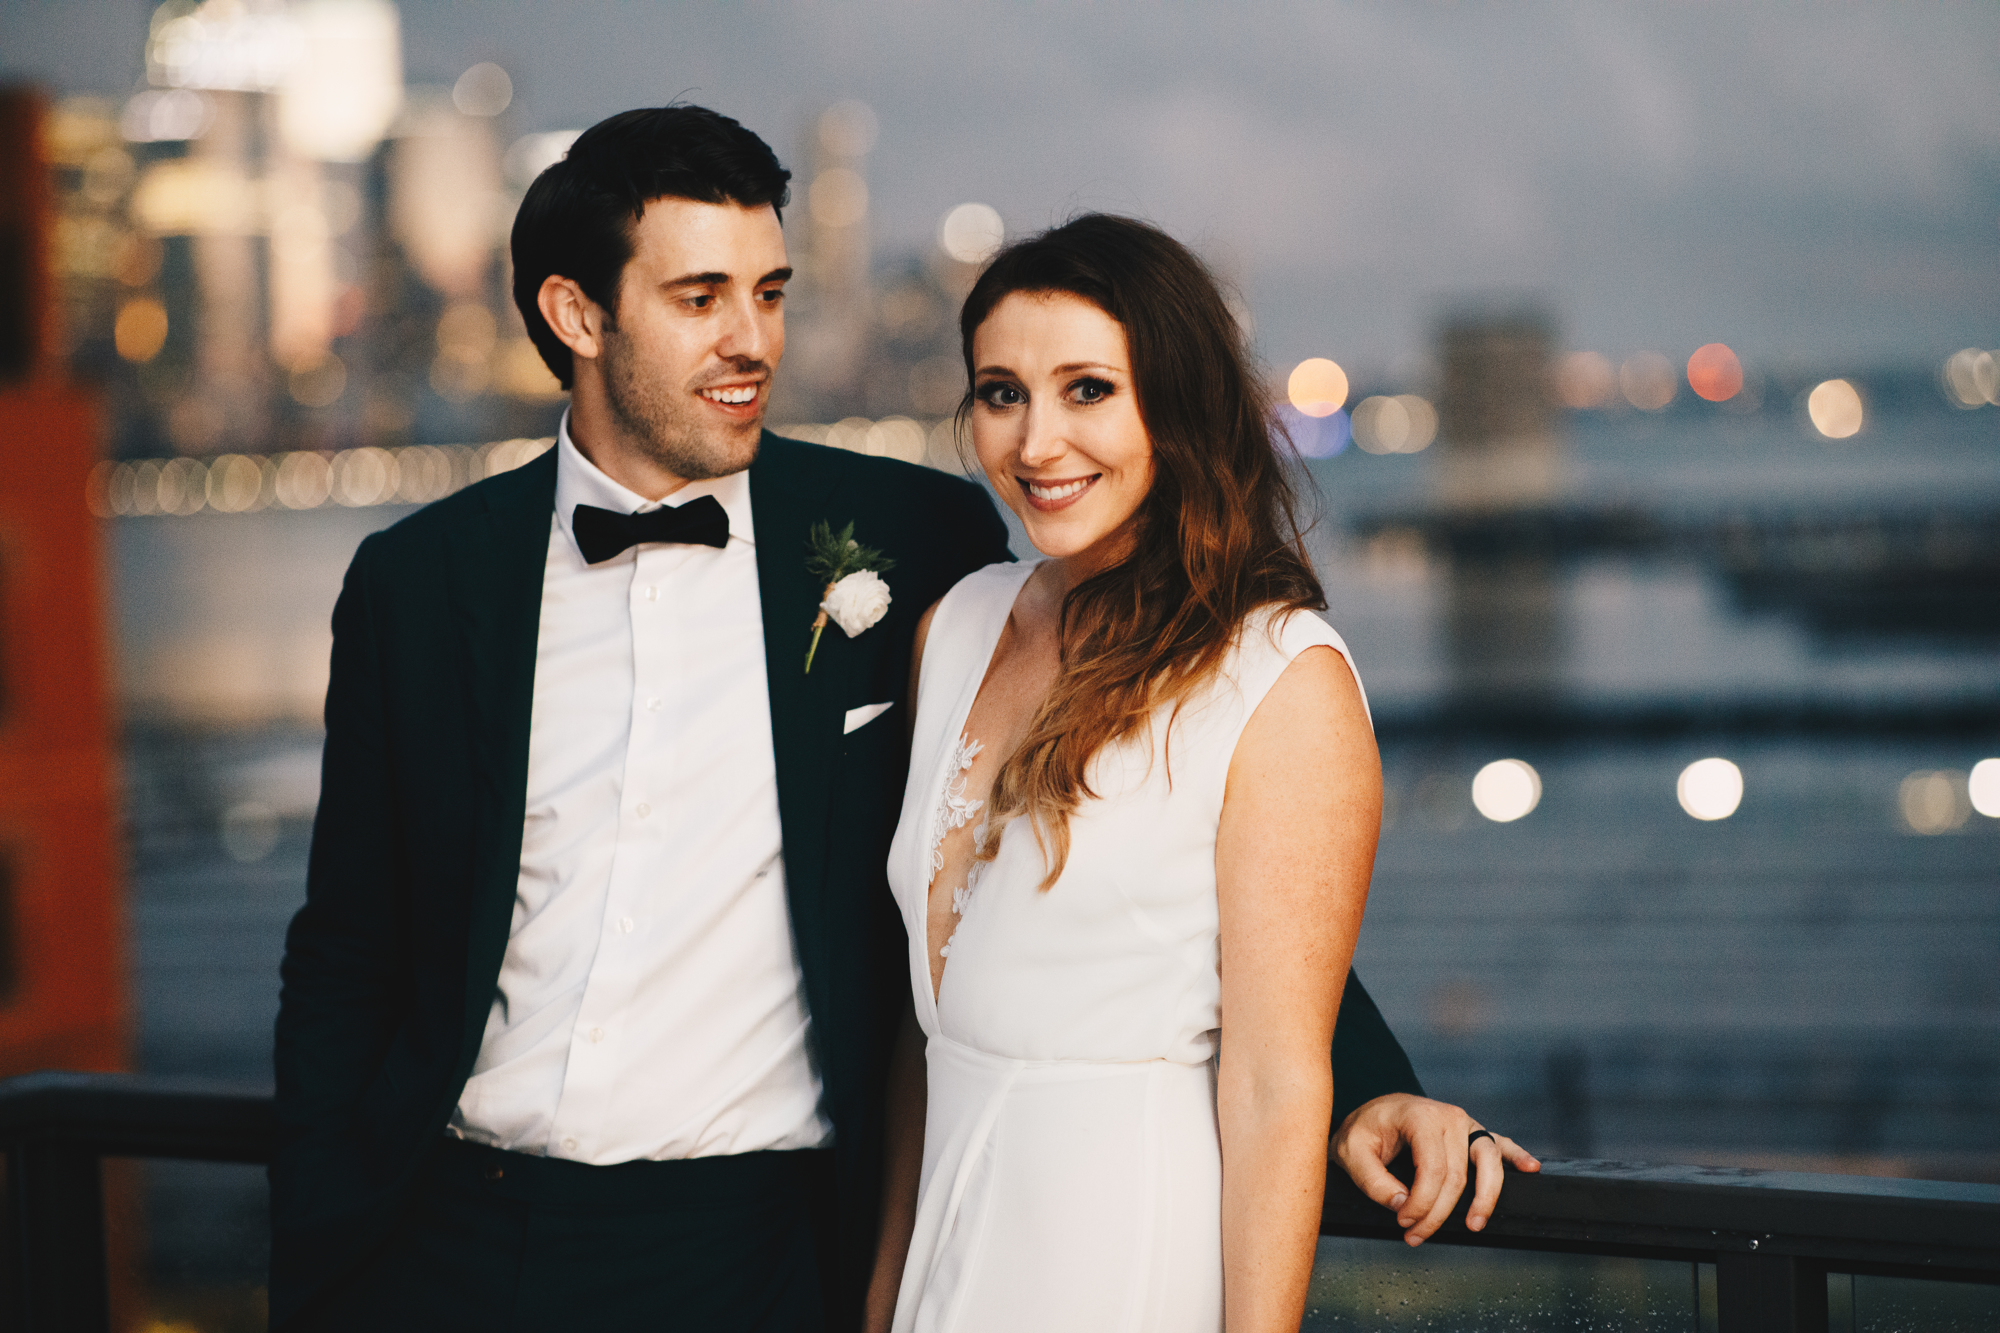 Award winning wedding photographers in New York City